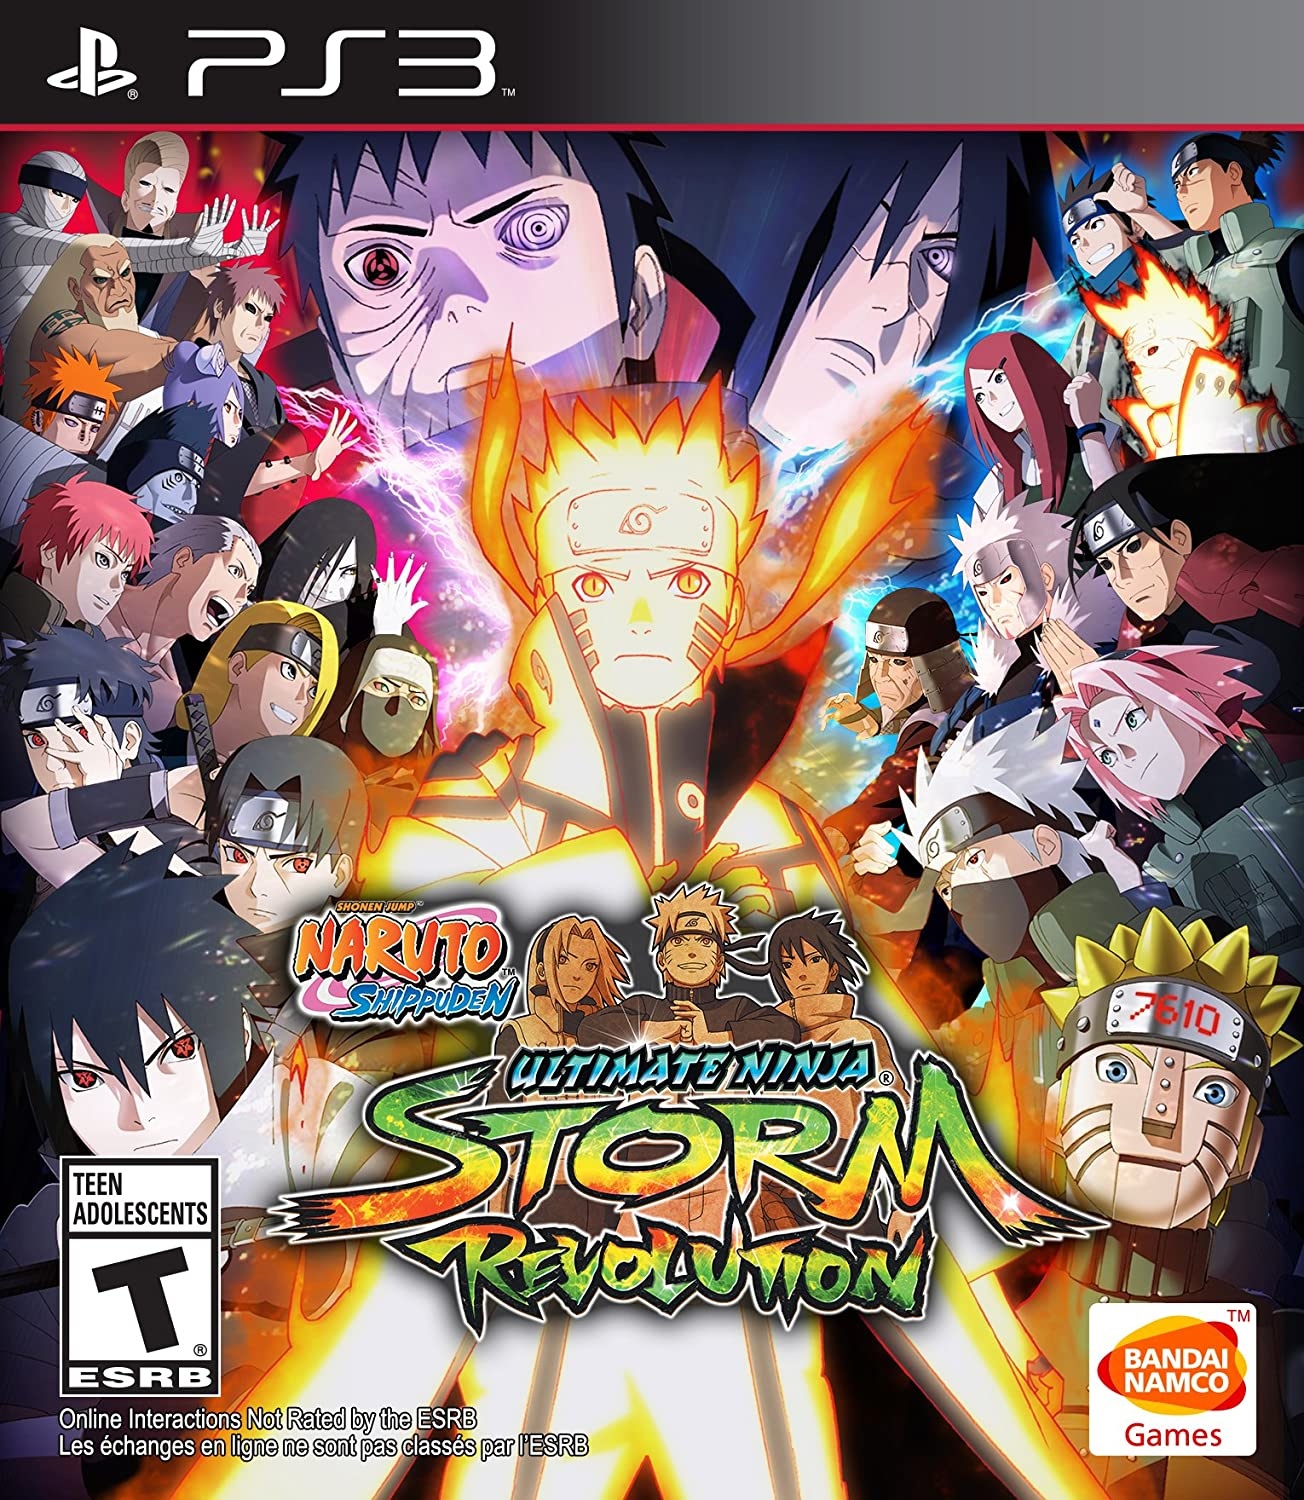 Bandai Namco, Naruto Shippuden: Ultimate Ninja Storm Revolution